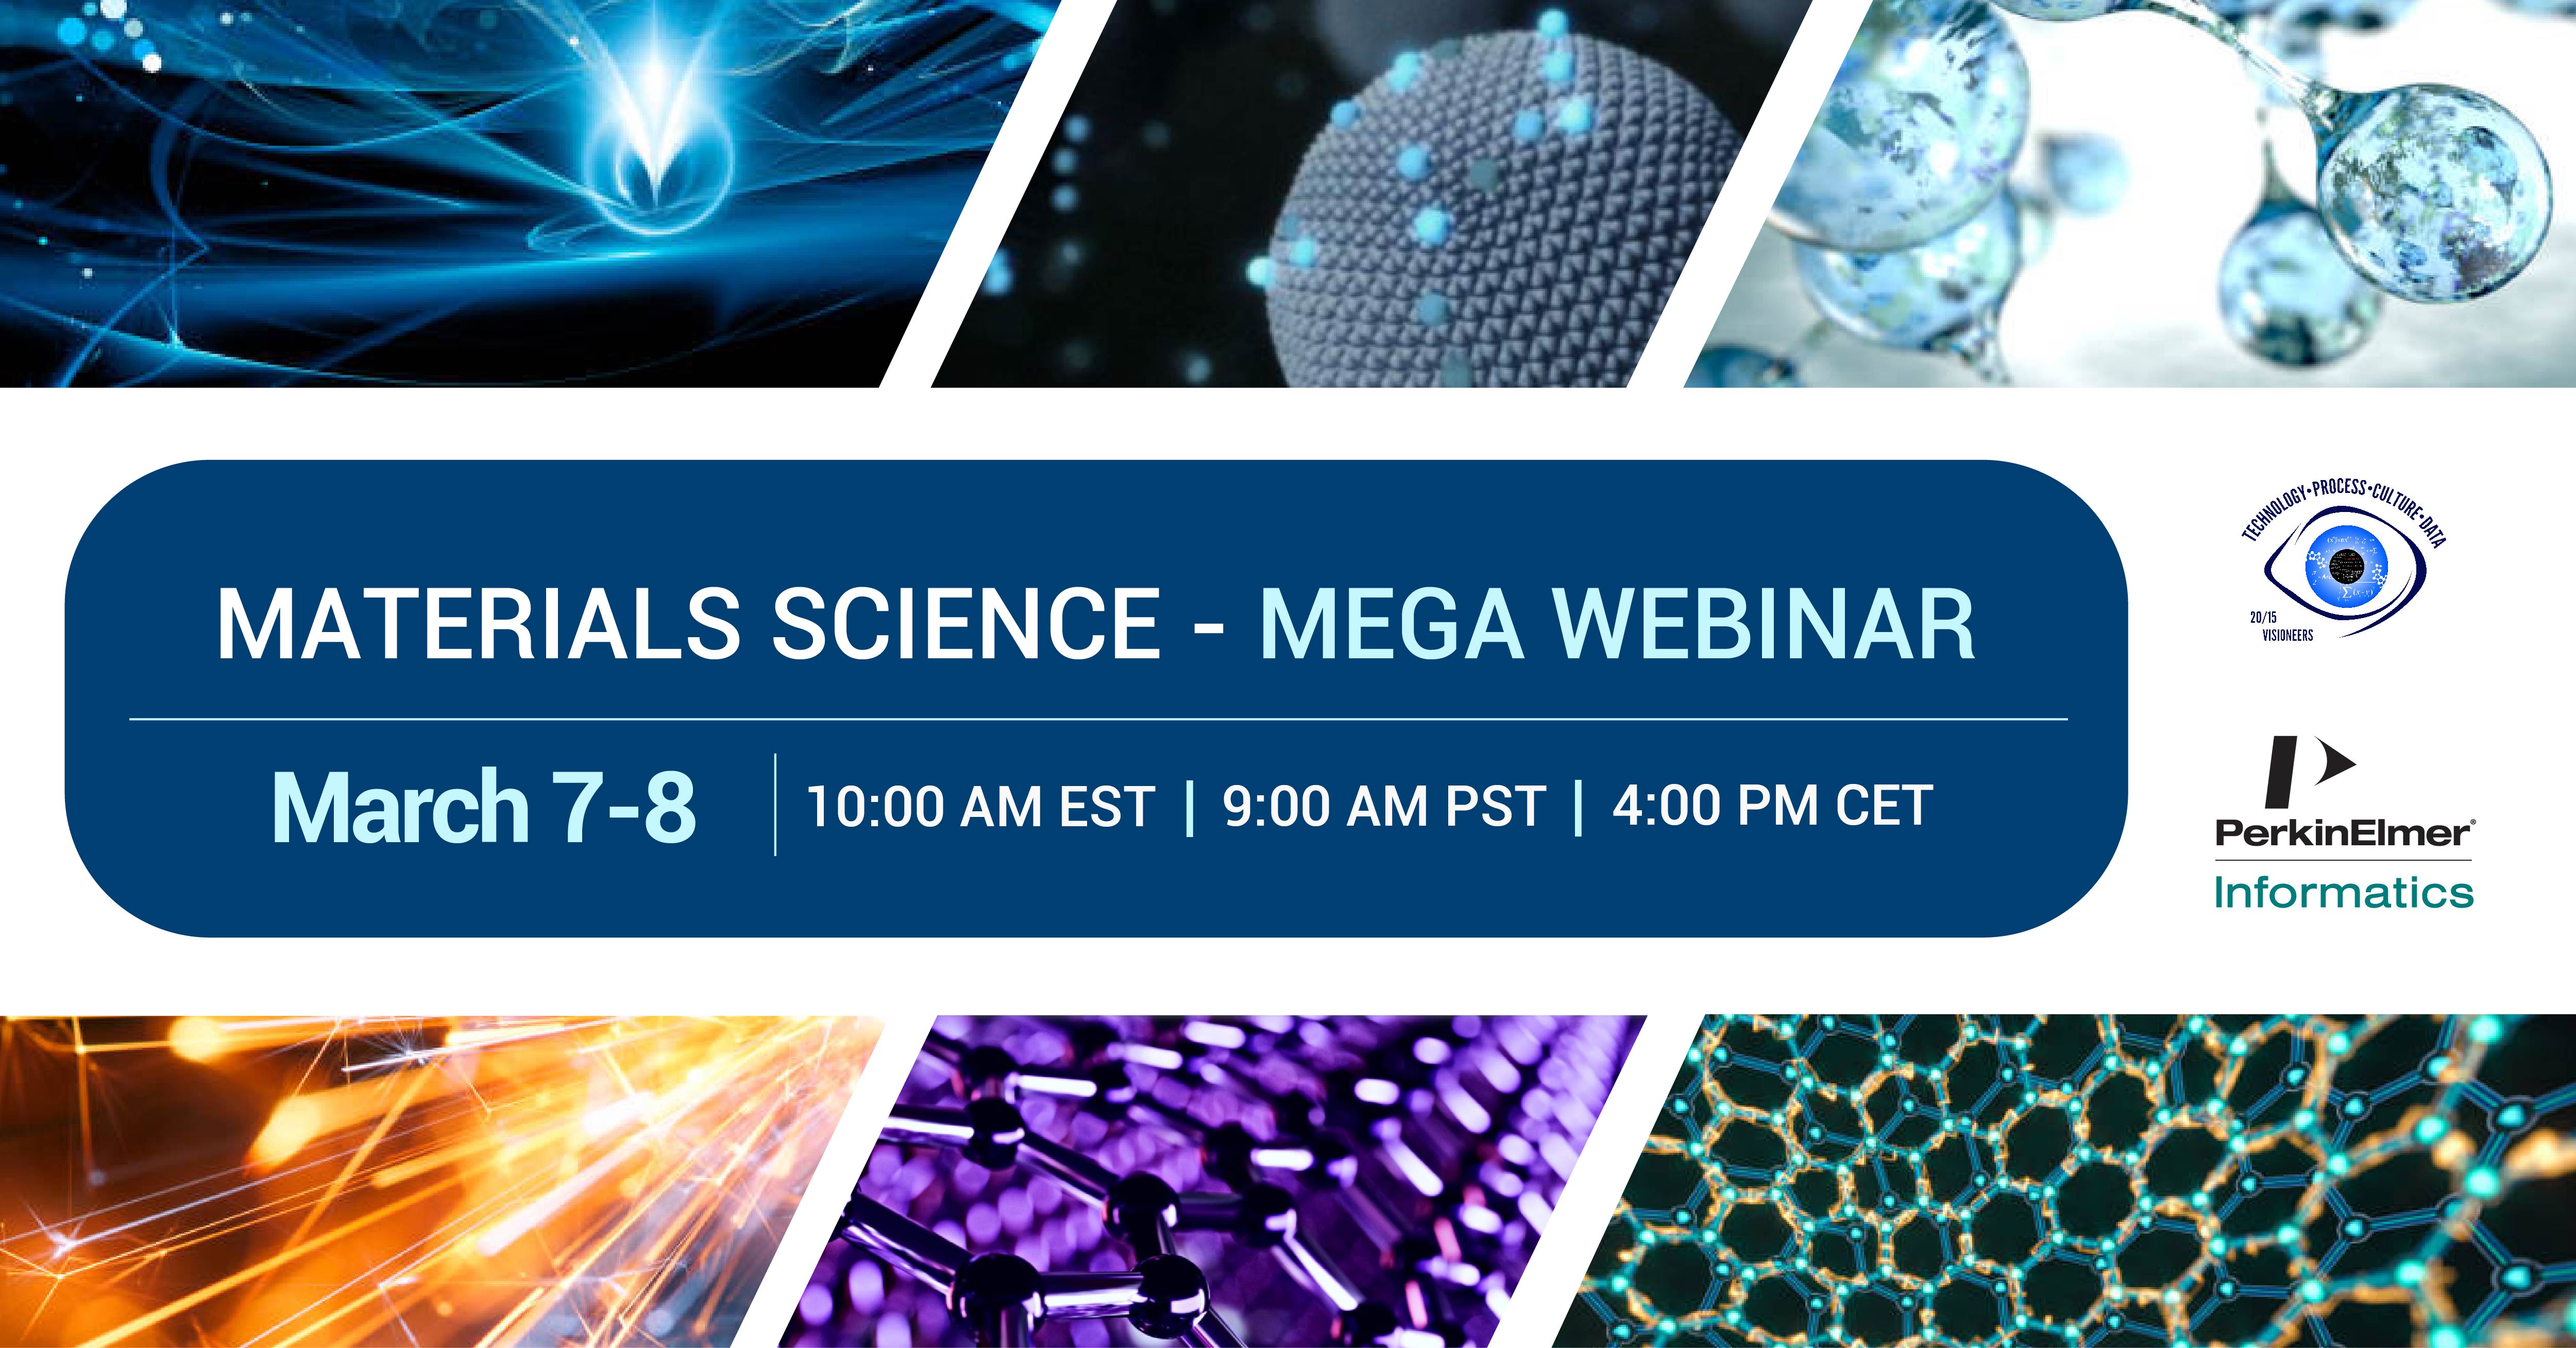 Materials Science - MEGA Webinar